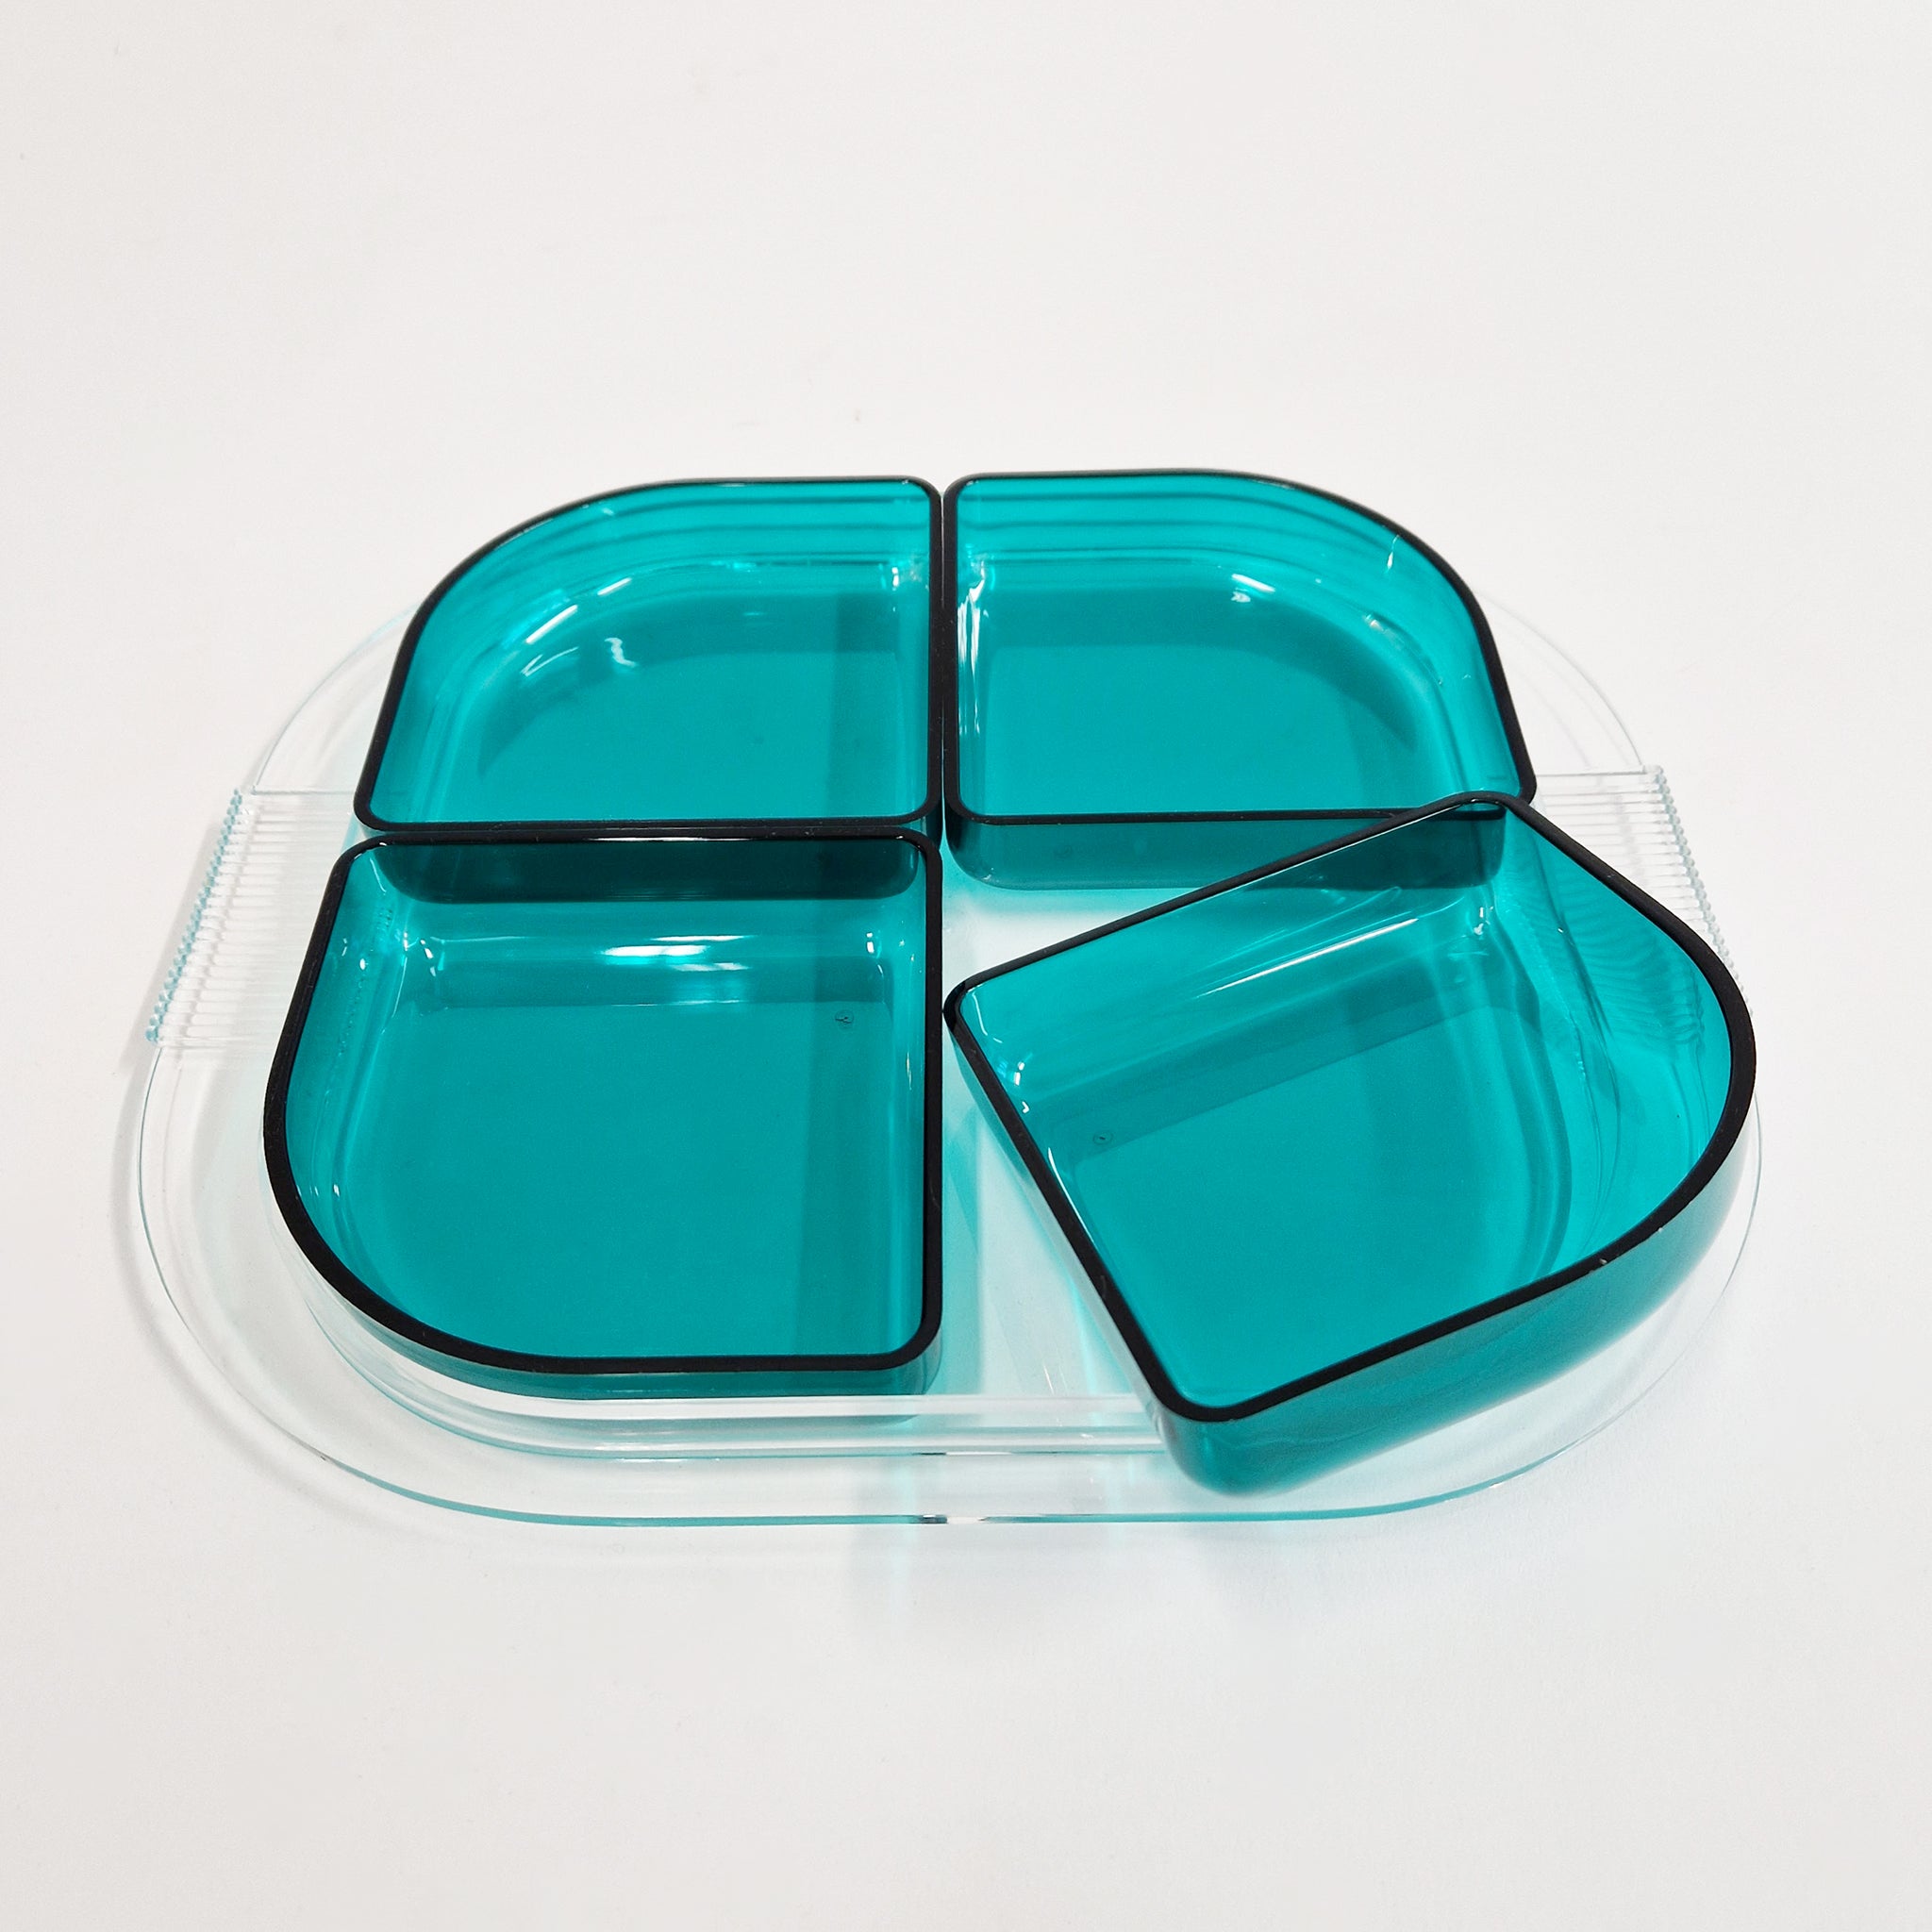 Vintage antipasti tray by Ambrogio Pozzi for Guzzini